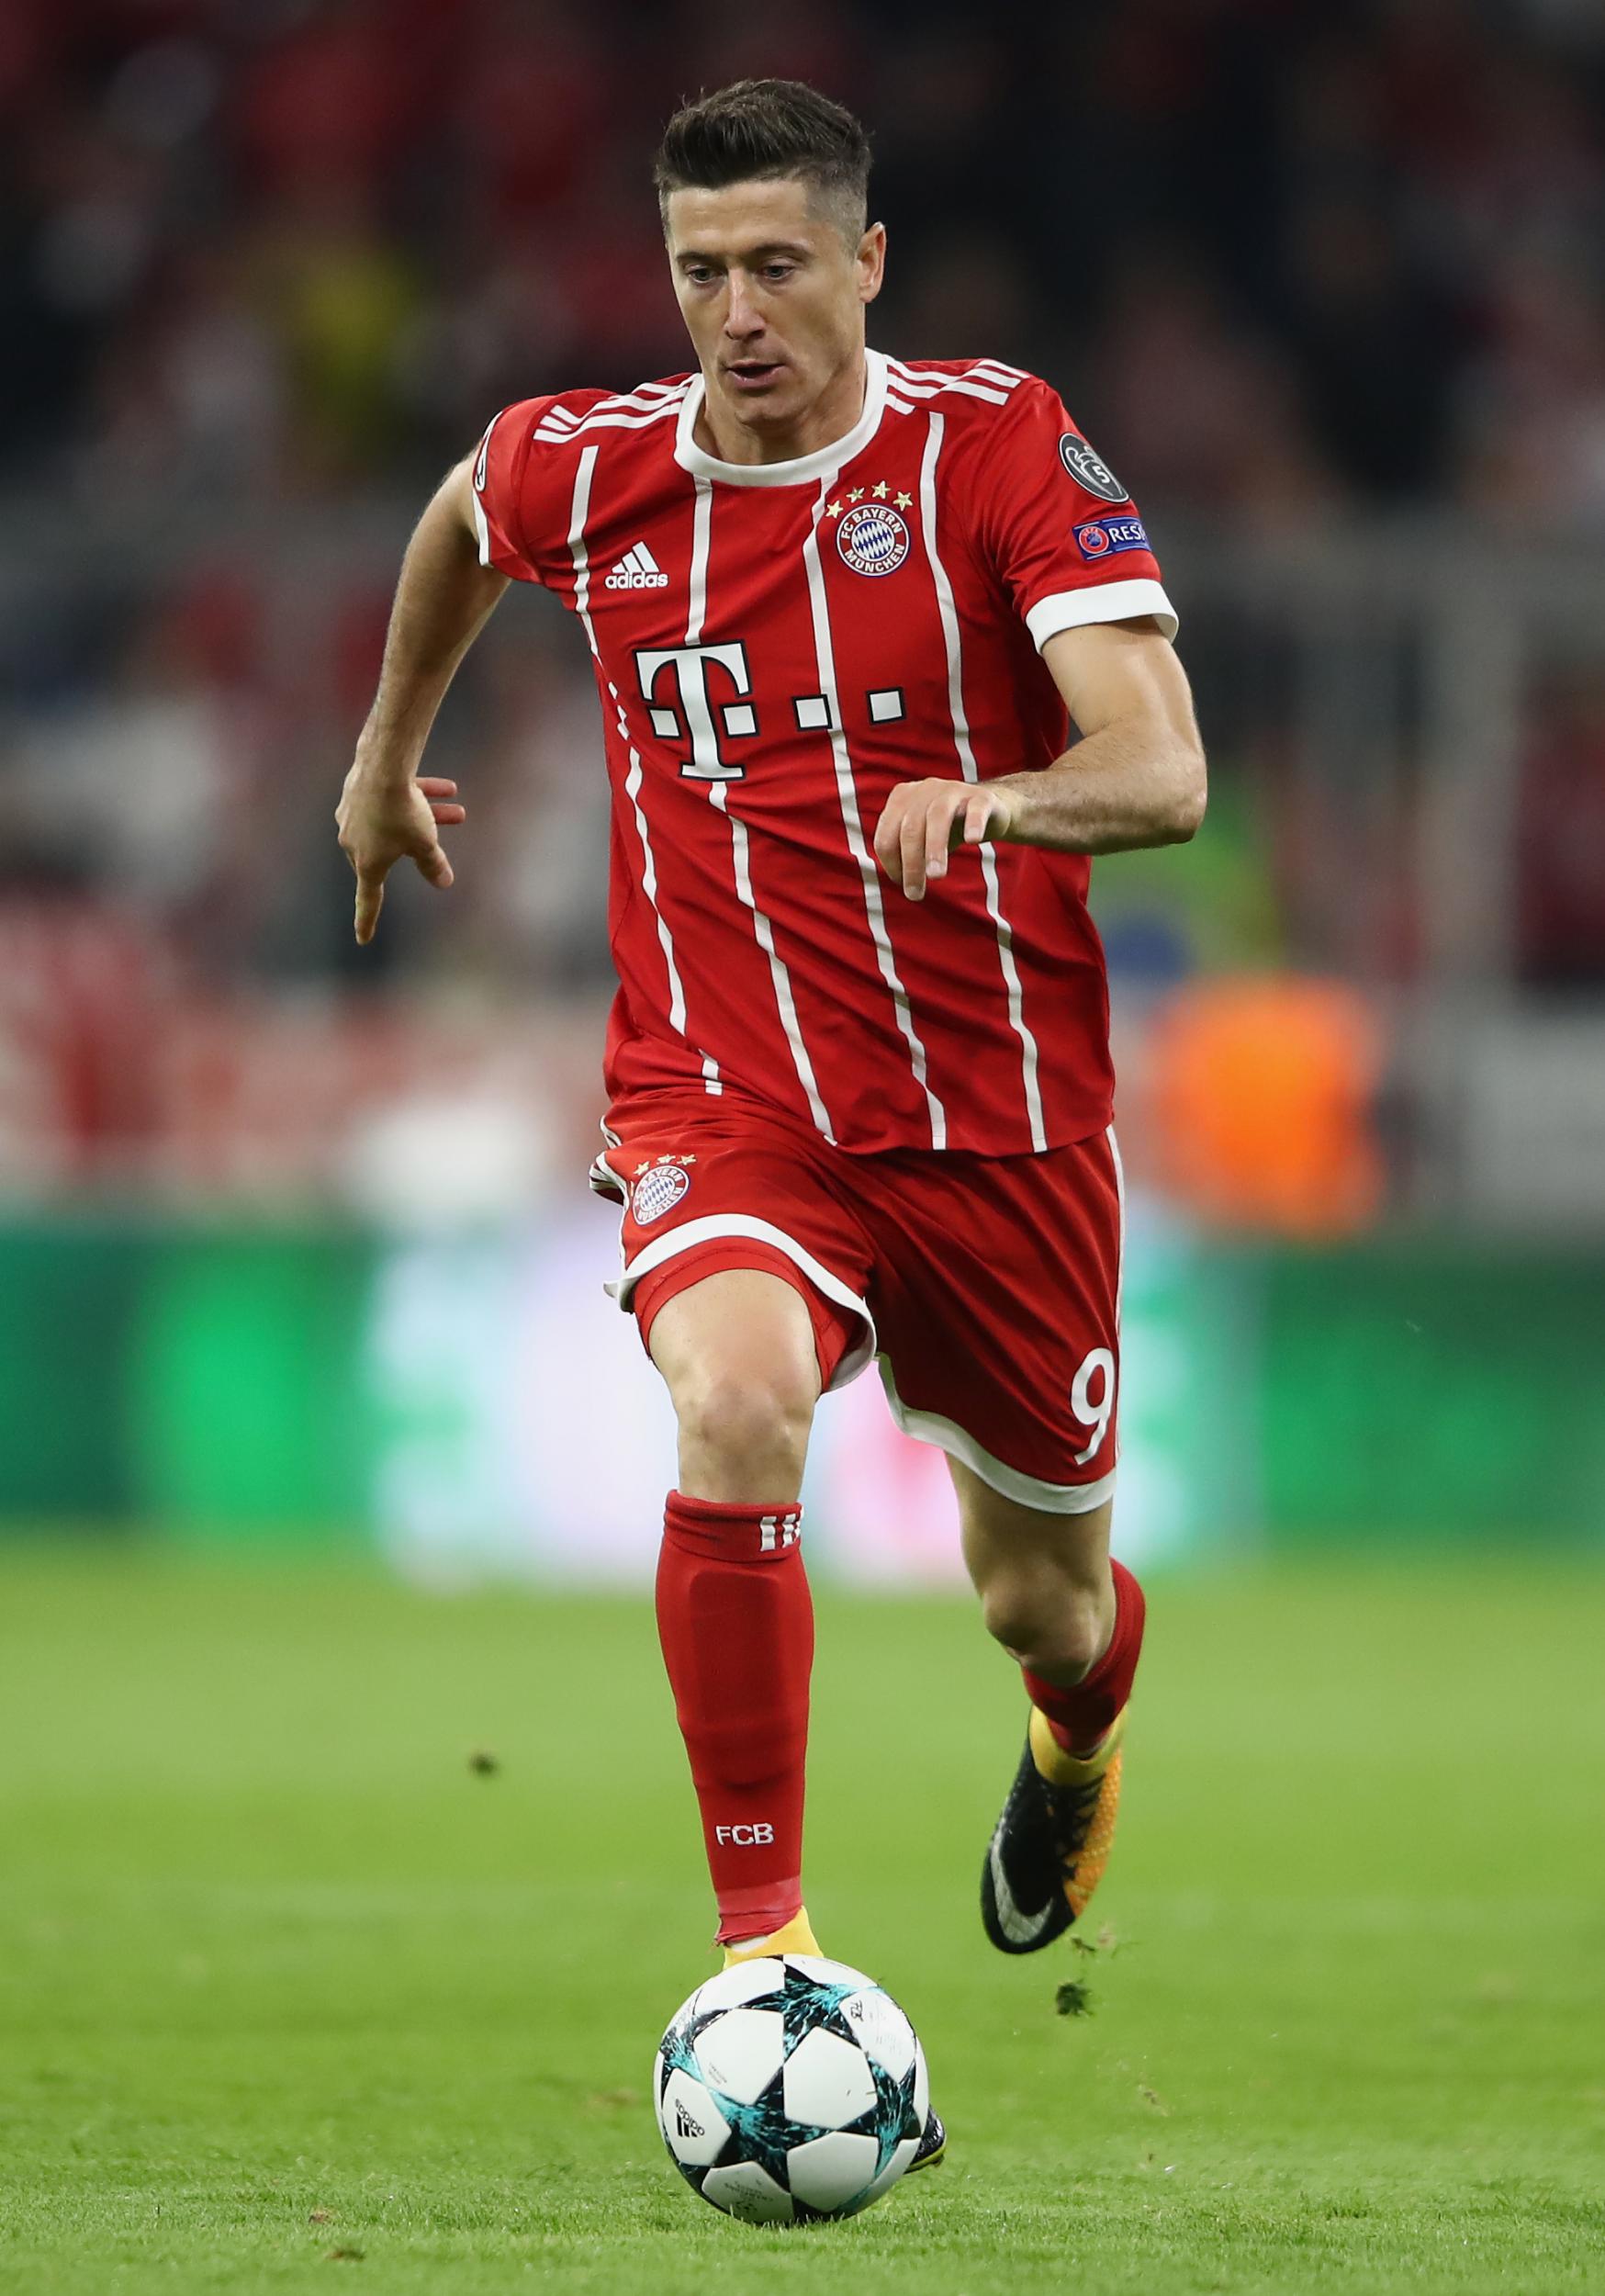 Lewandowski opened the scoring for Bayern Munich